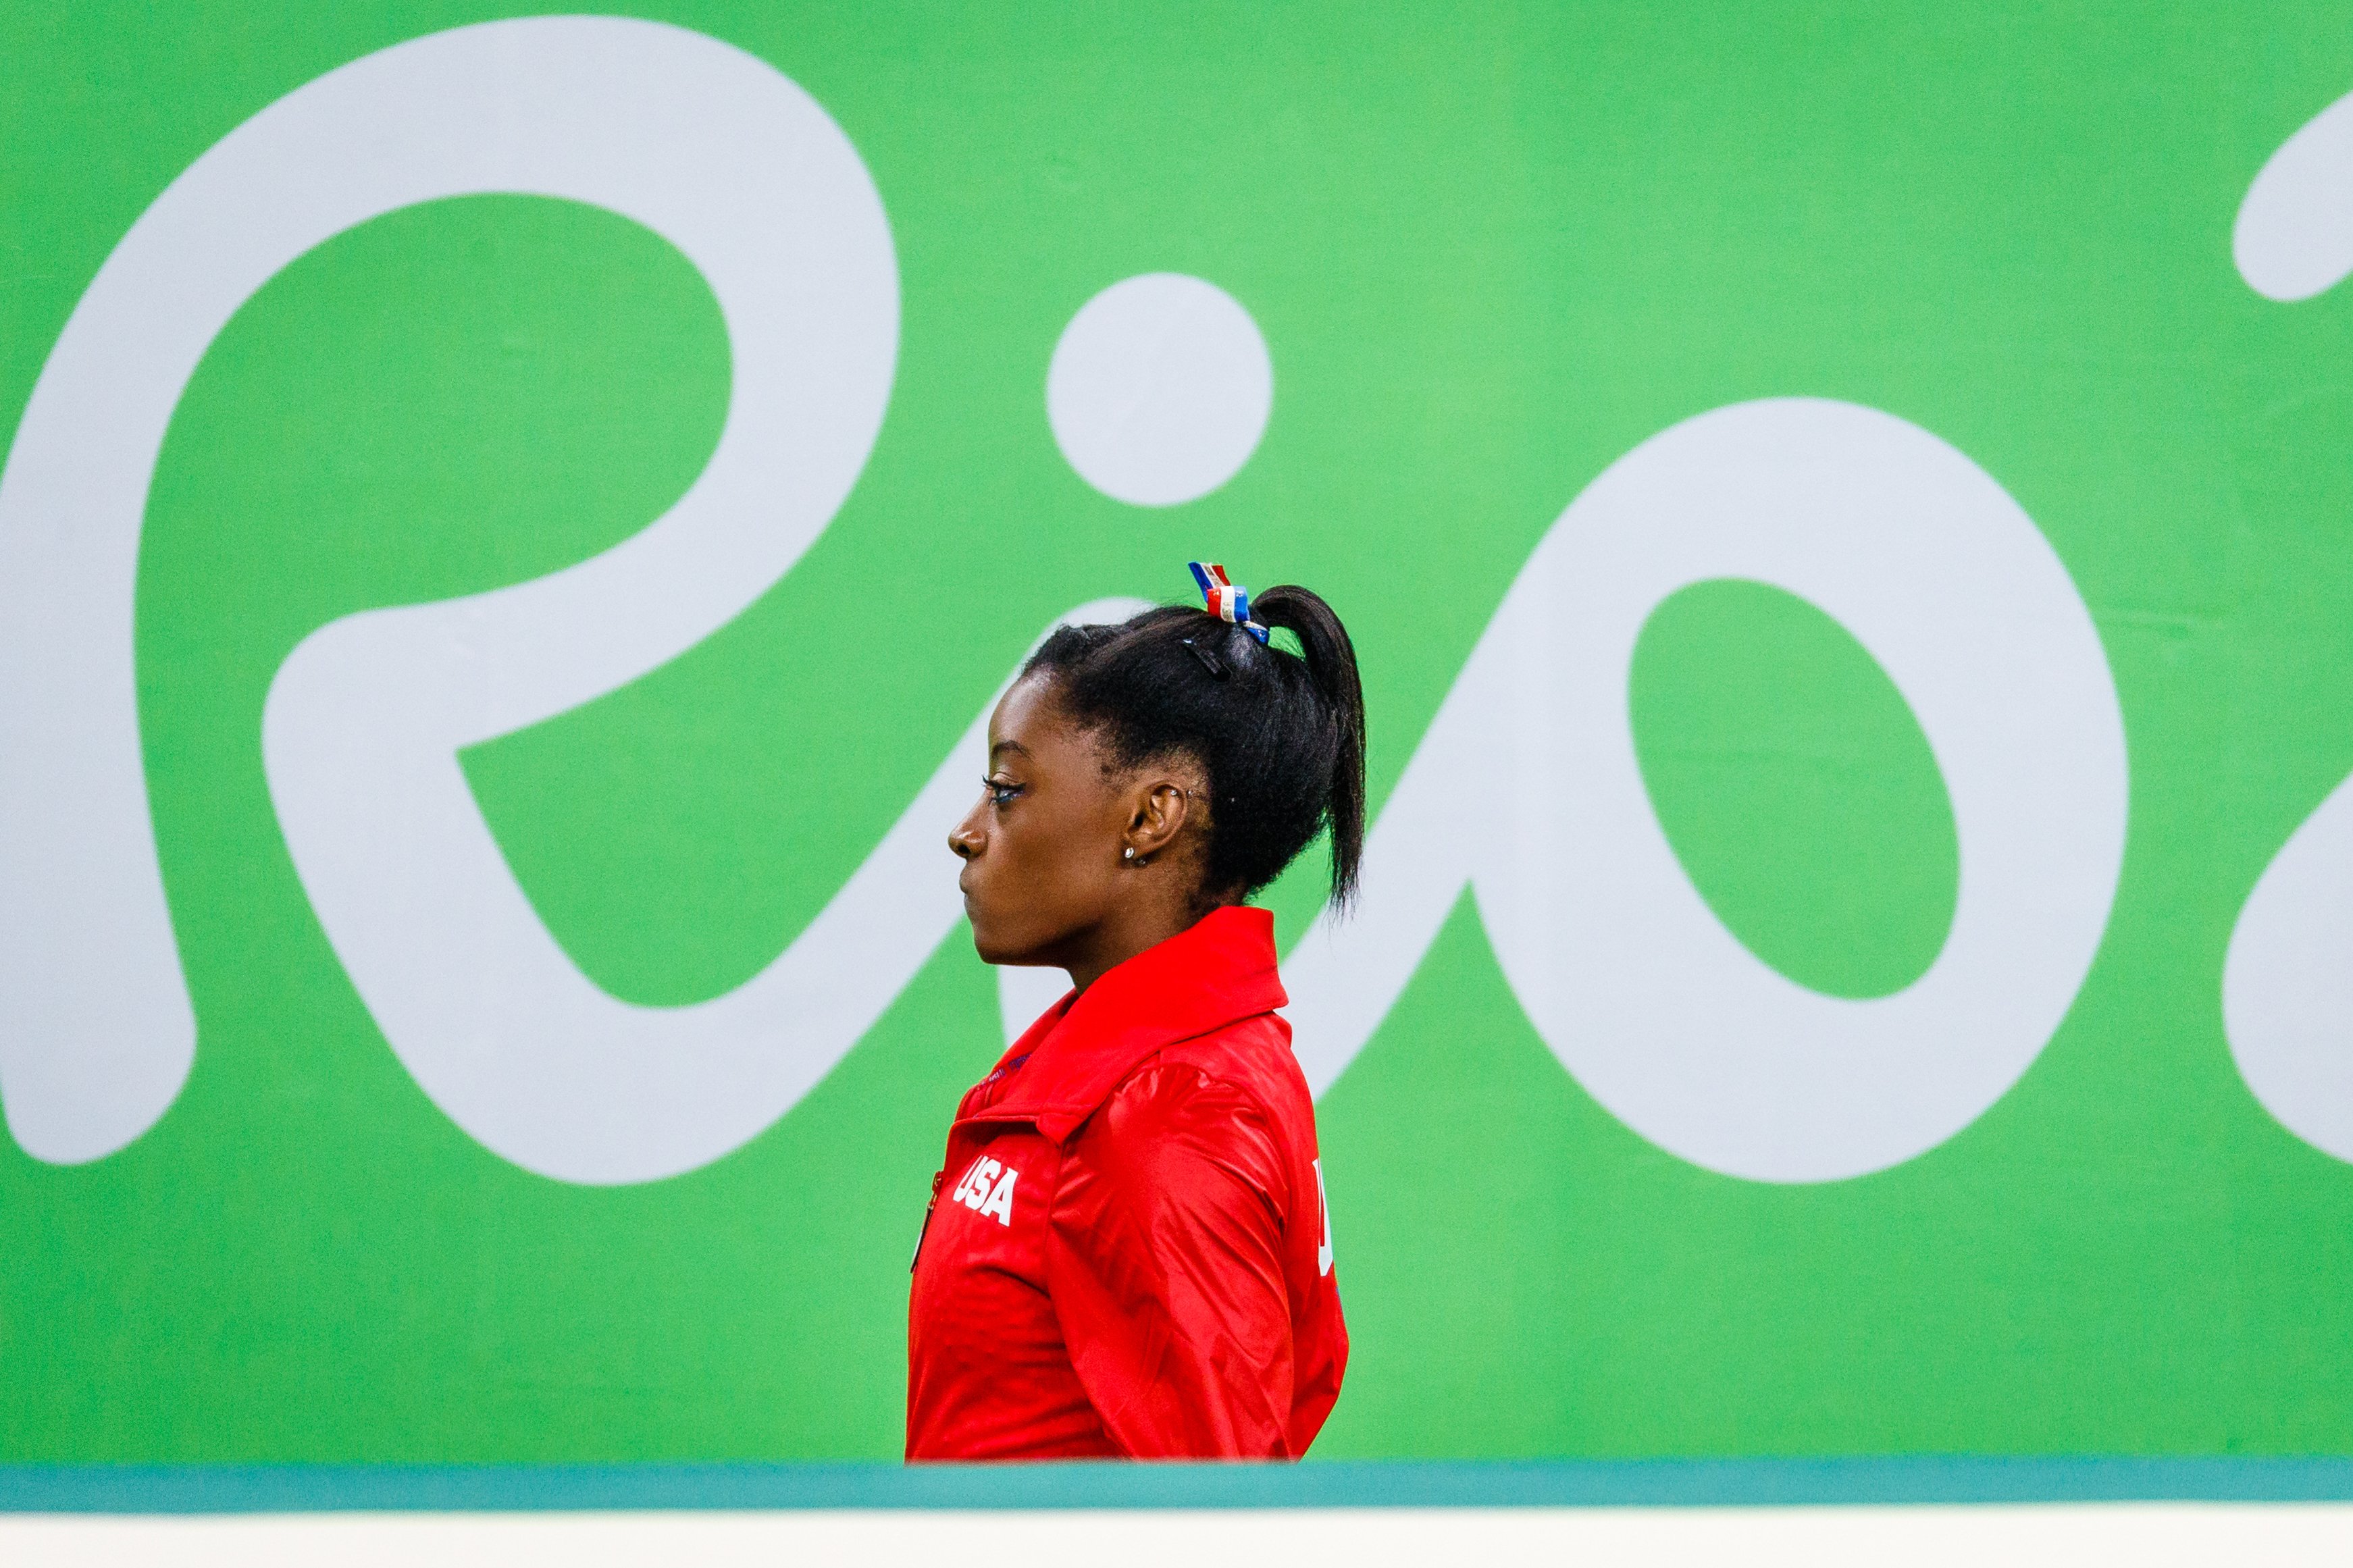 Simone Biles at Rio Olympics. Image credit: Petr Toman / Shutterstock.com